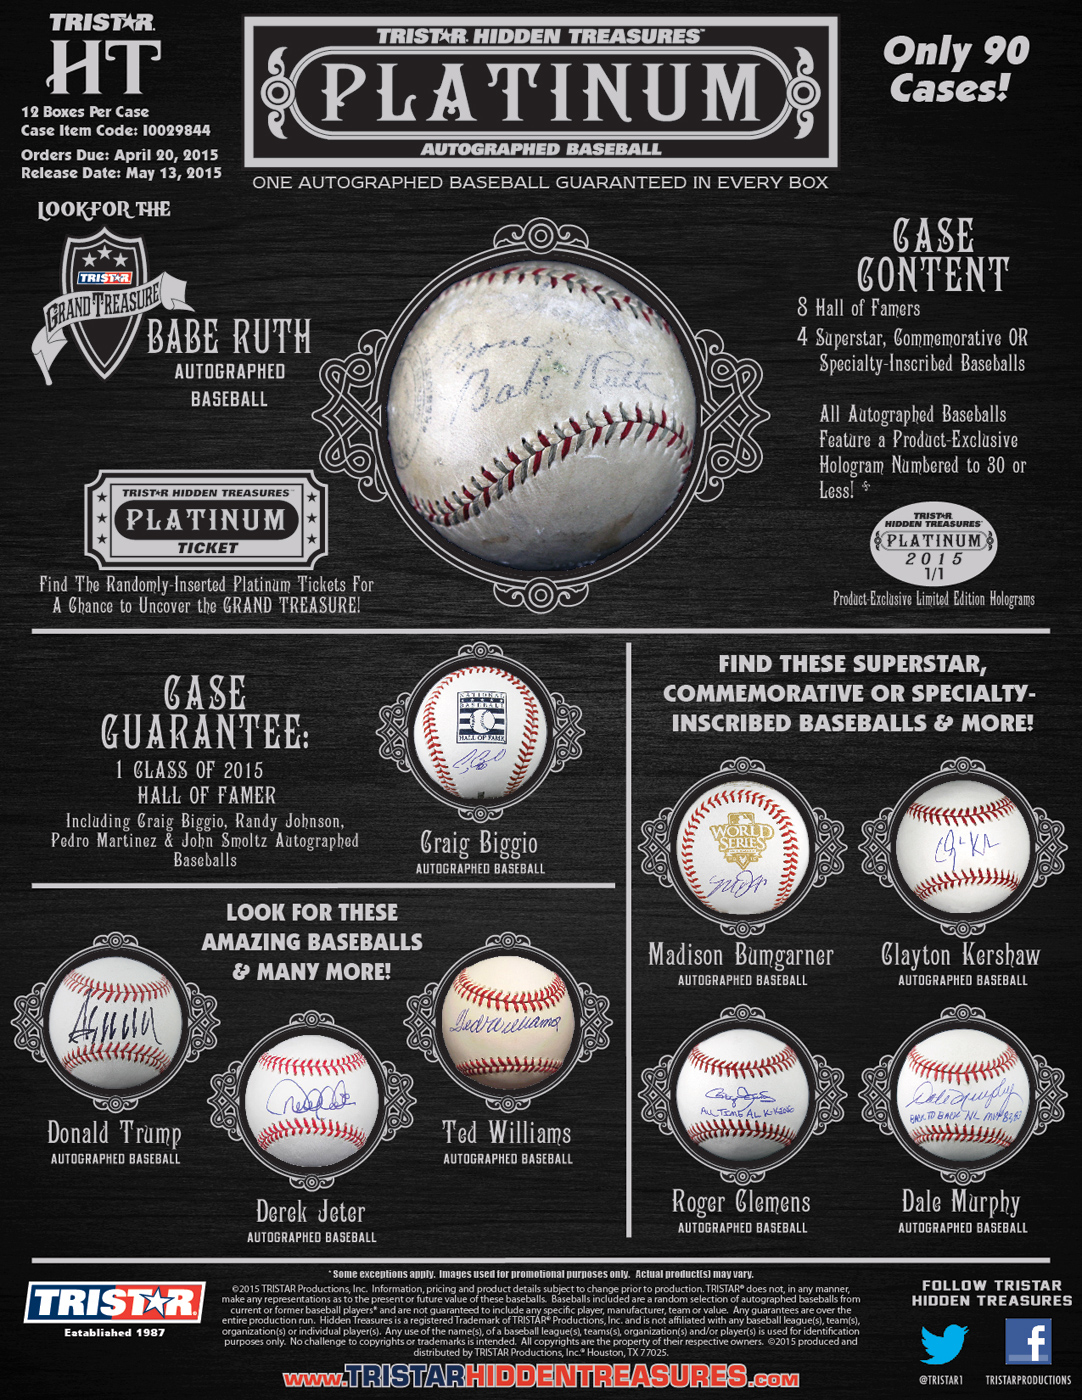 TRISTAR Hidden Treasures Autographed Baseball Platinum Edition